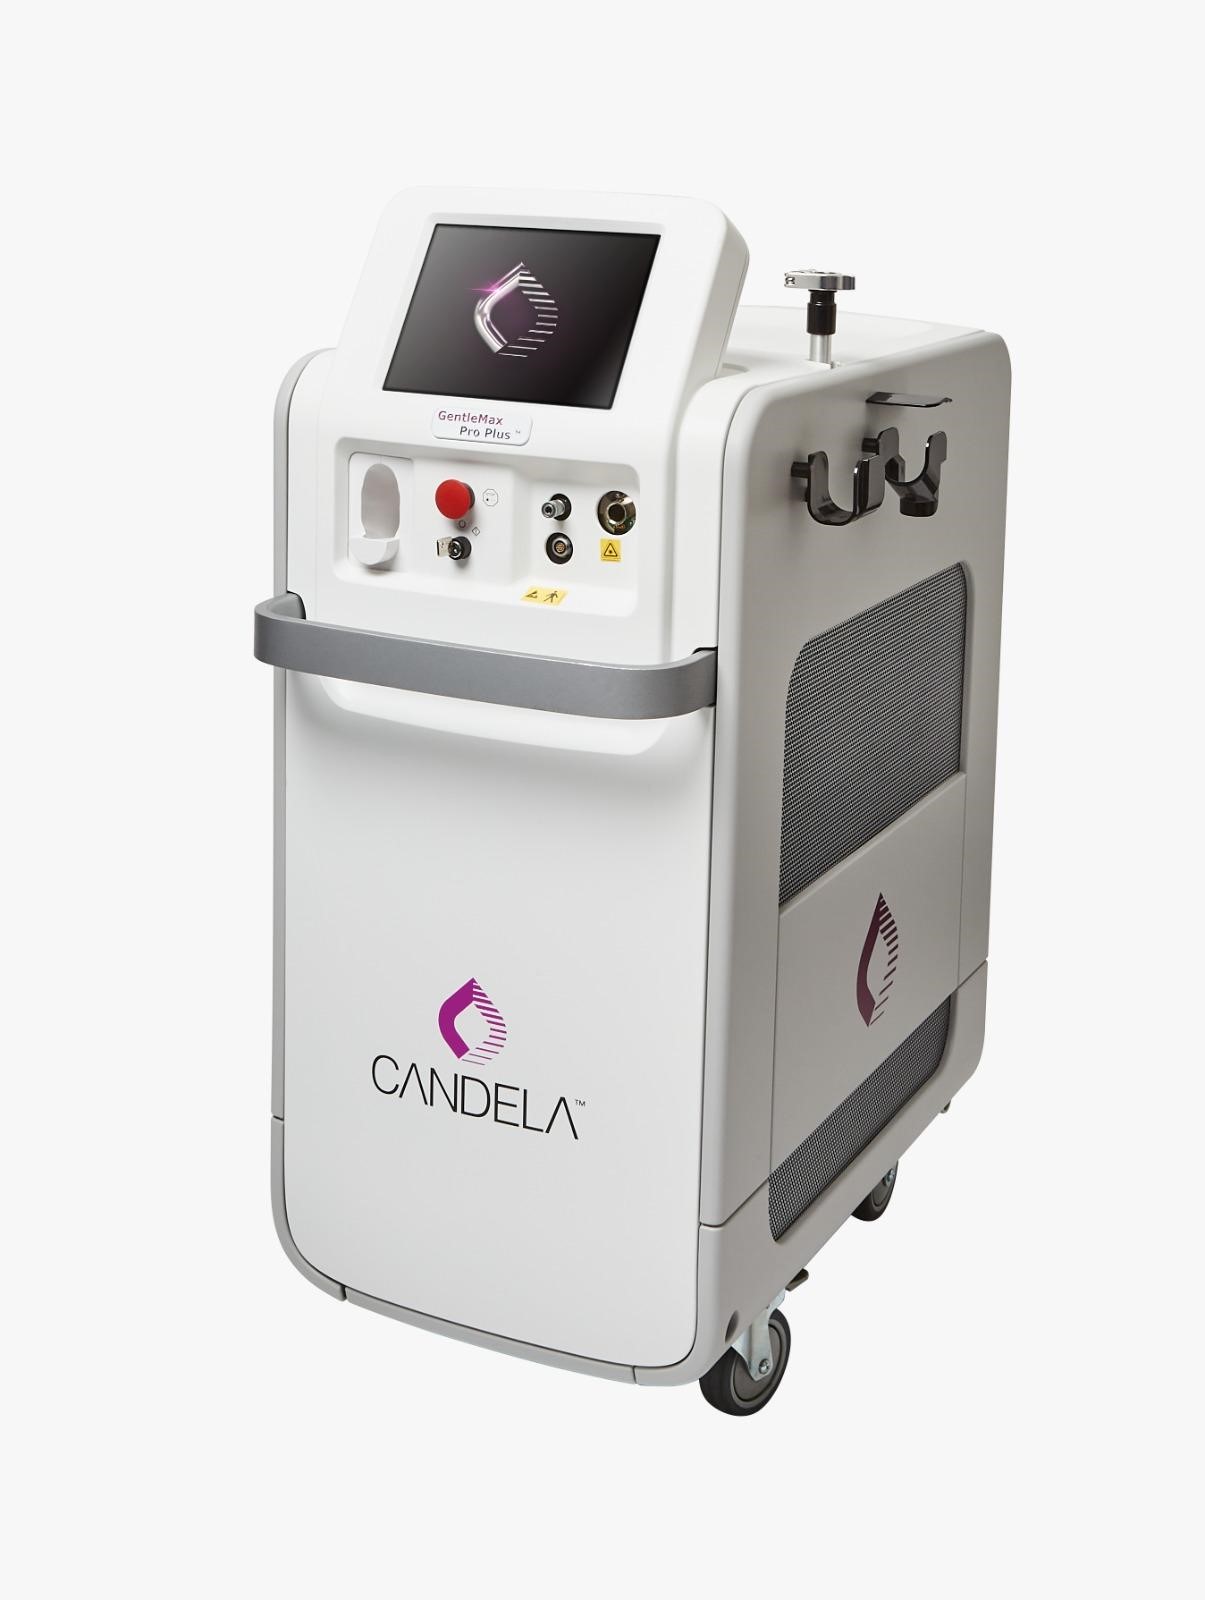 Medilase Candela GentleMax Pro Plus 激光脫毛儀器